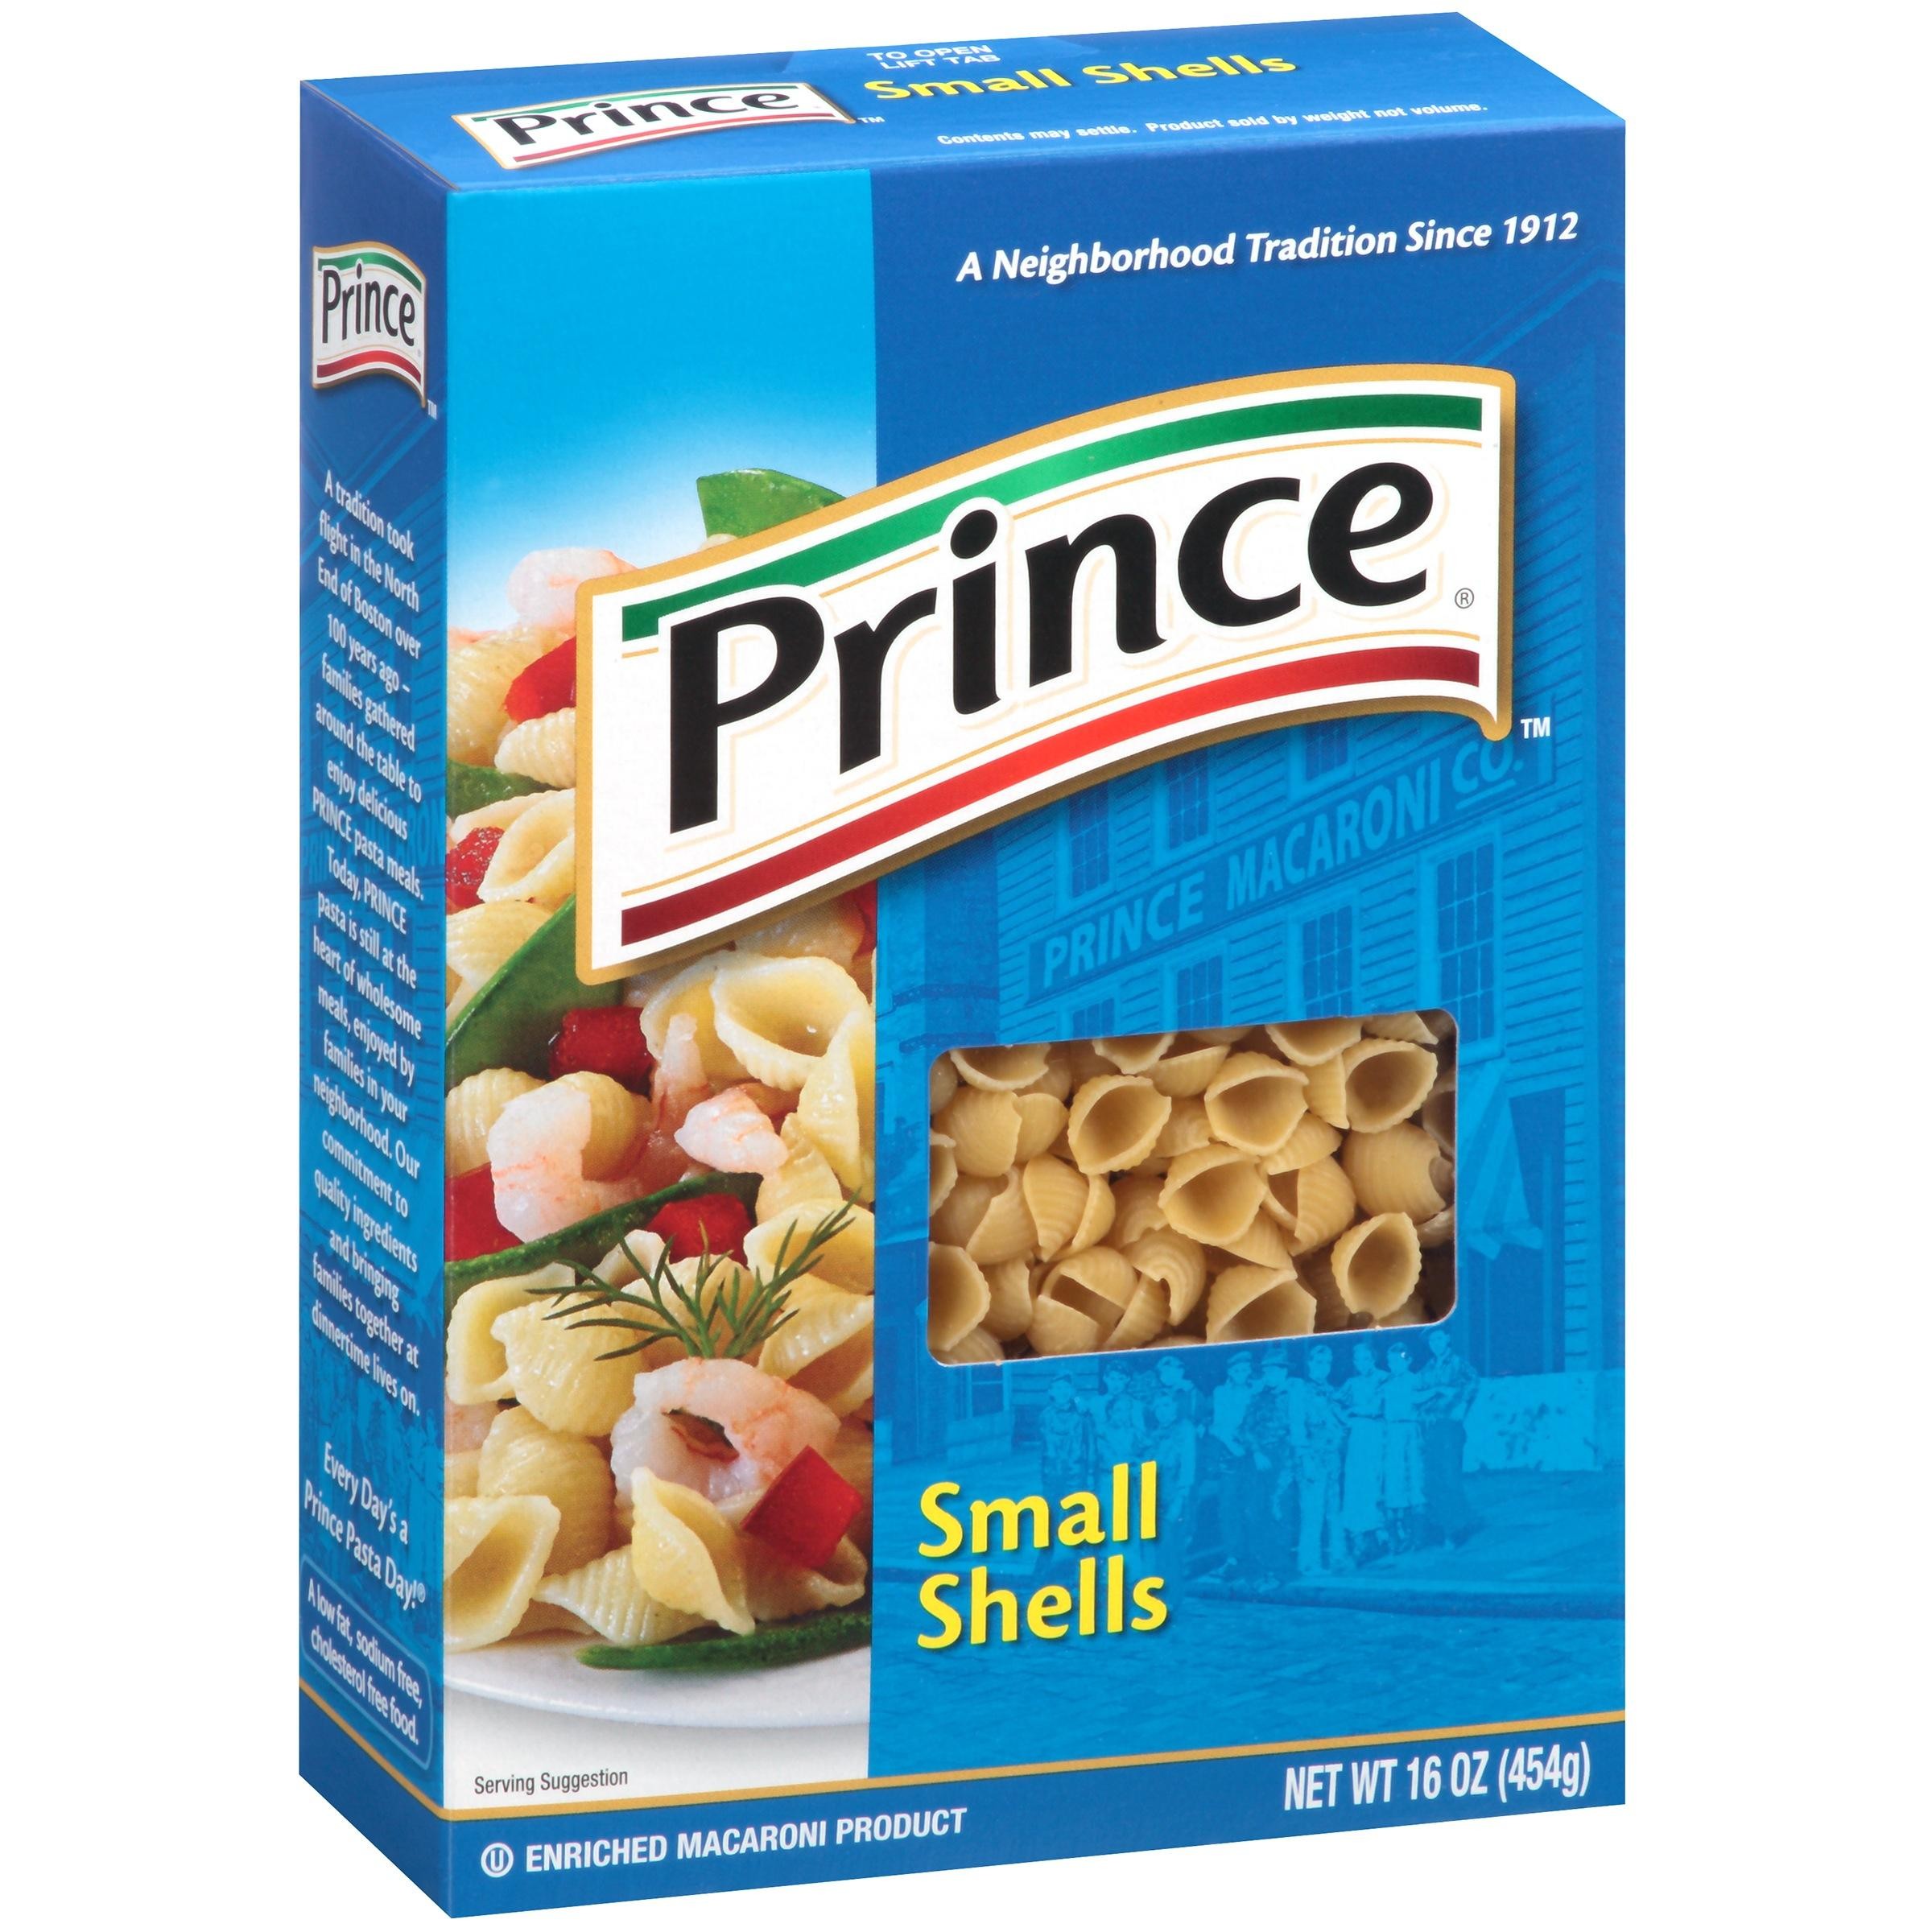 Prince, Enriched Macaroni Product, Small Shells